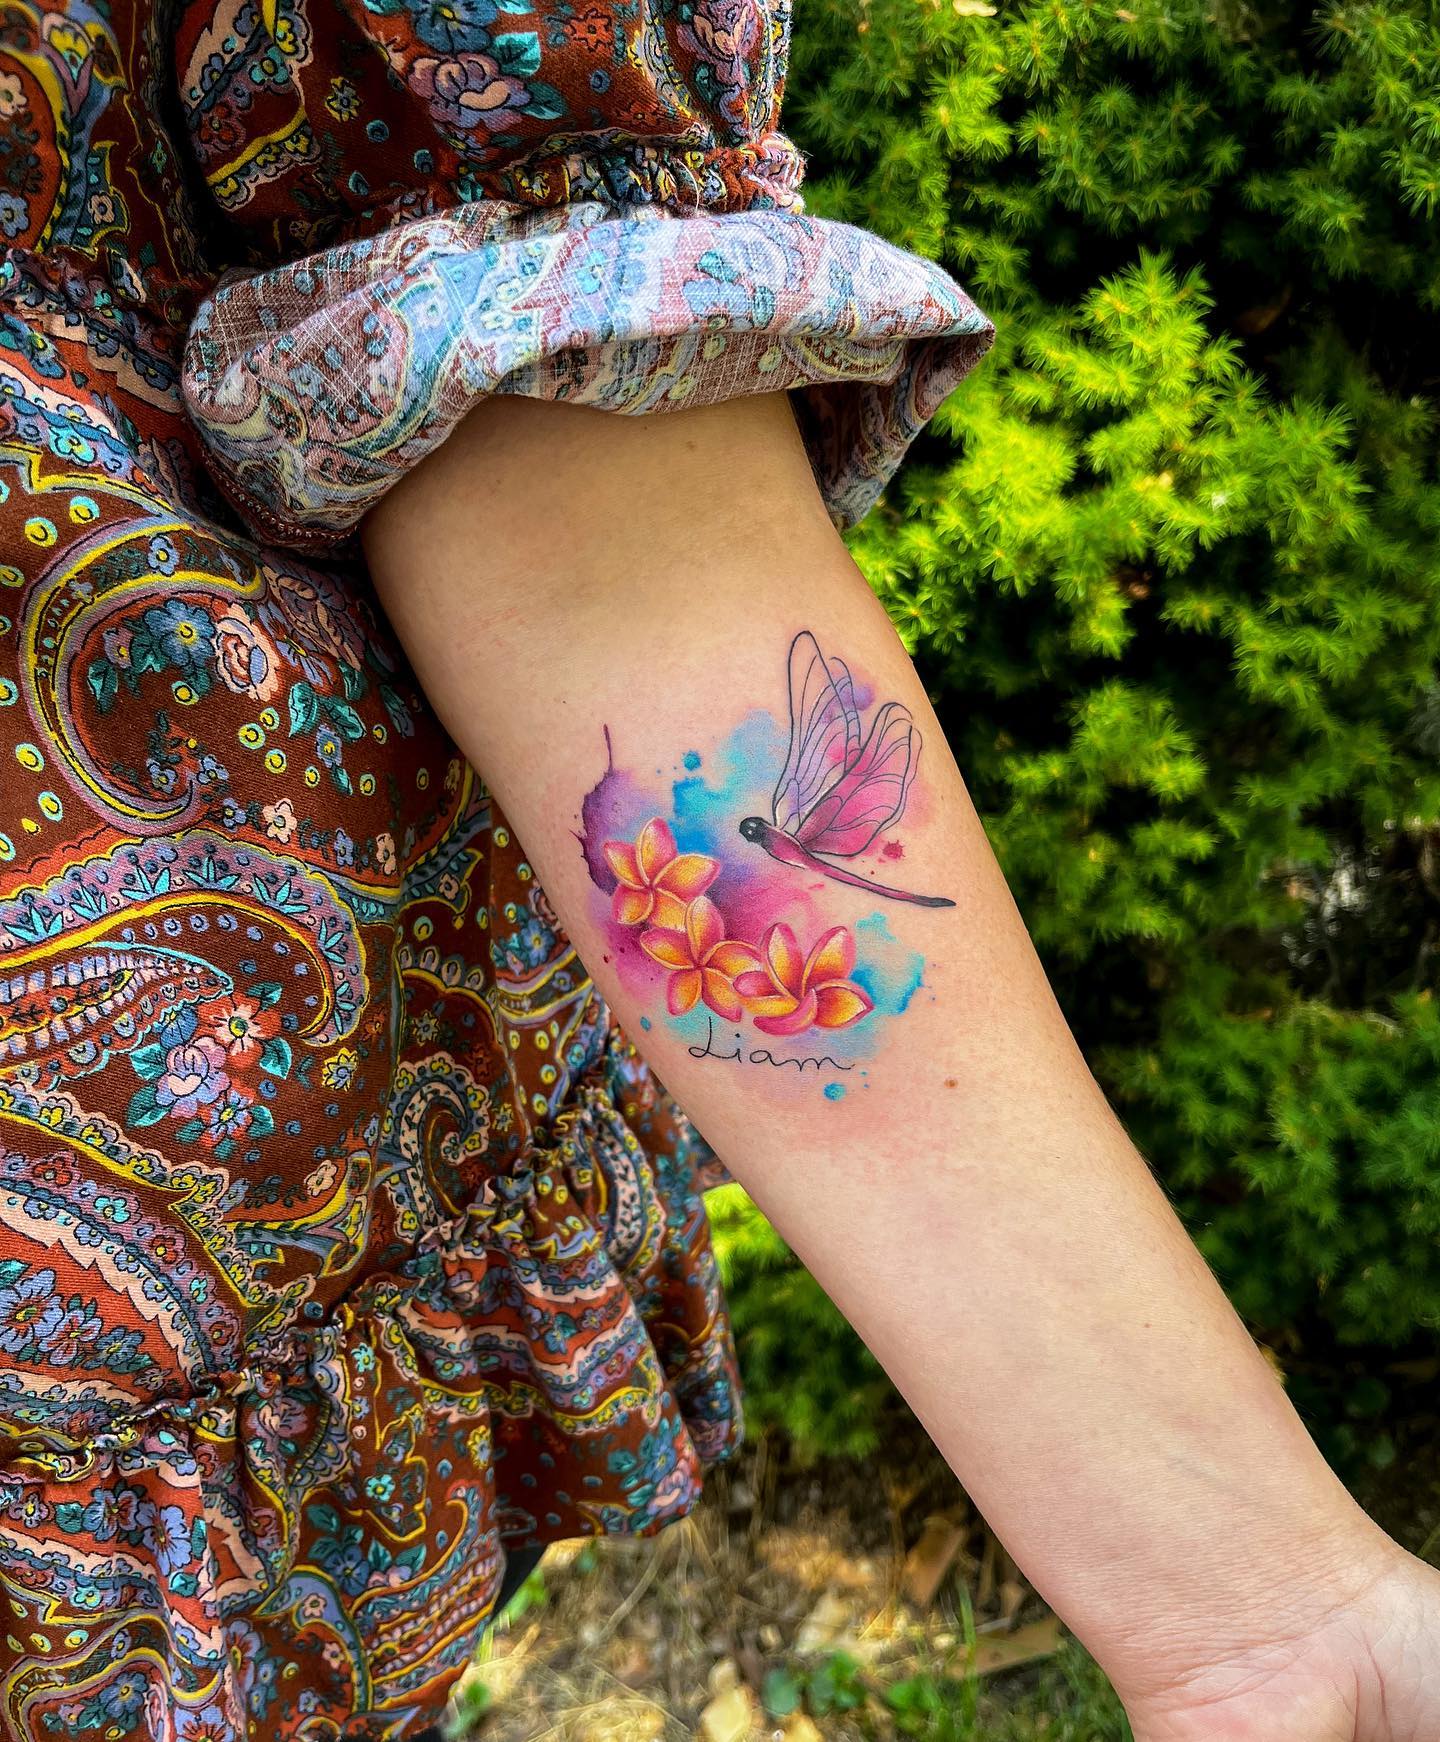 Tatuaje de libélula colorido en el brazo.